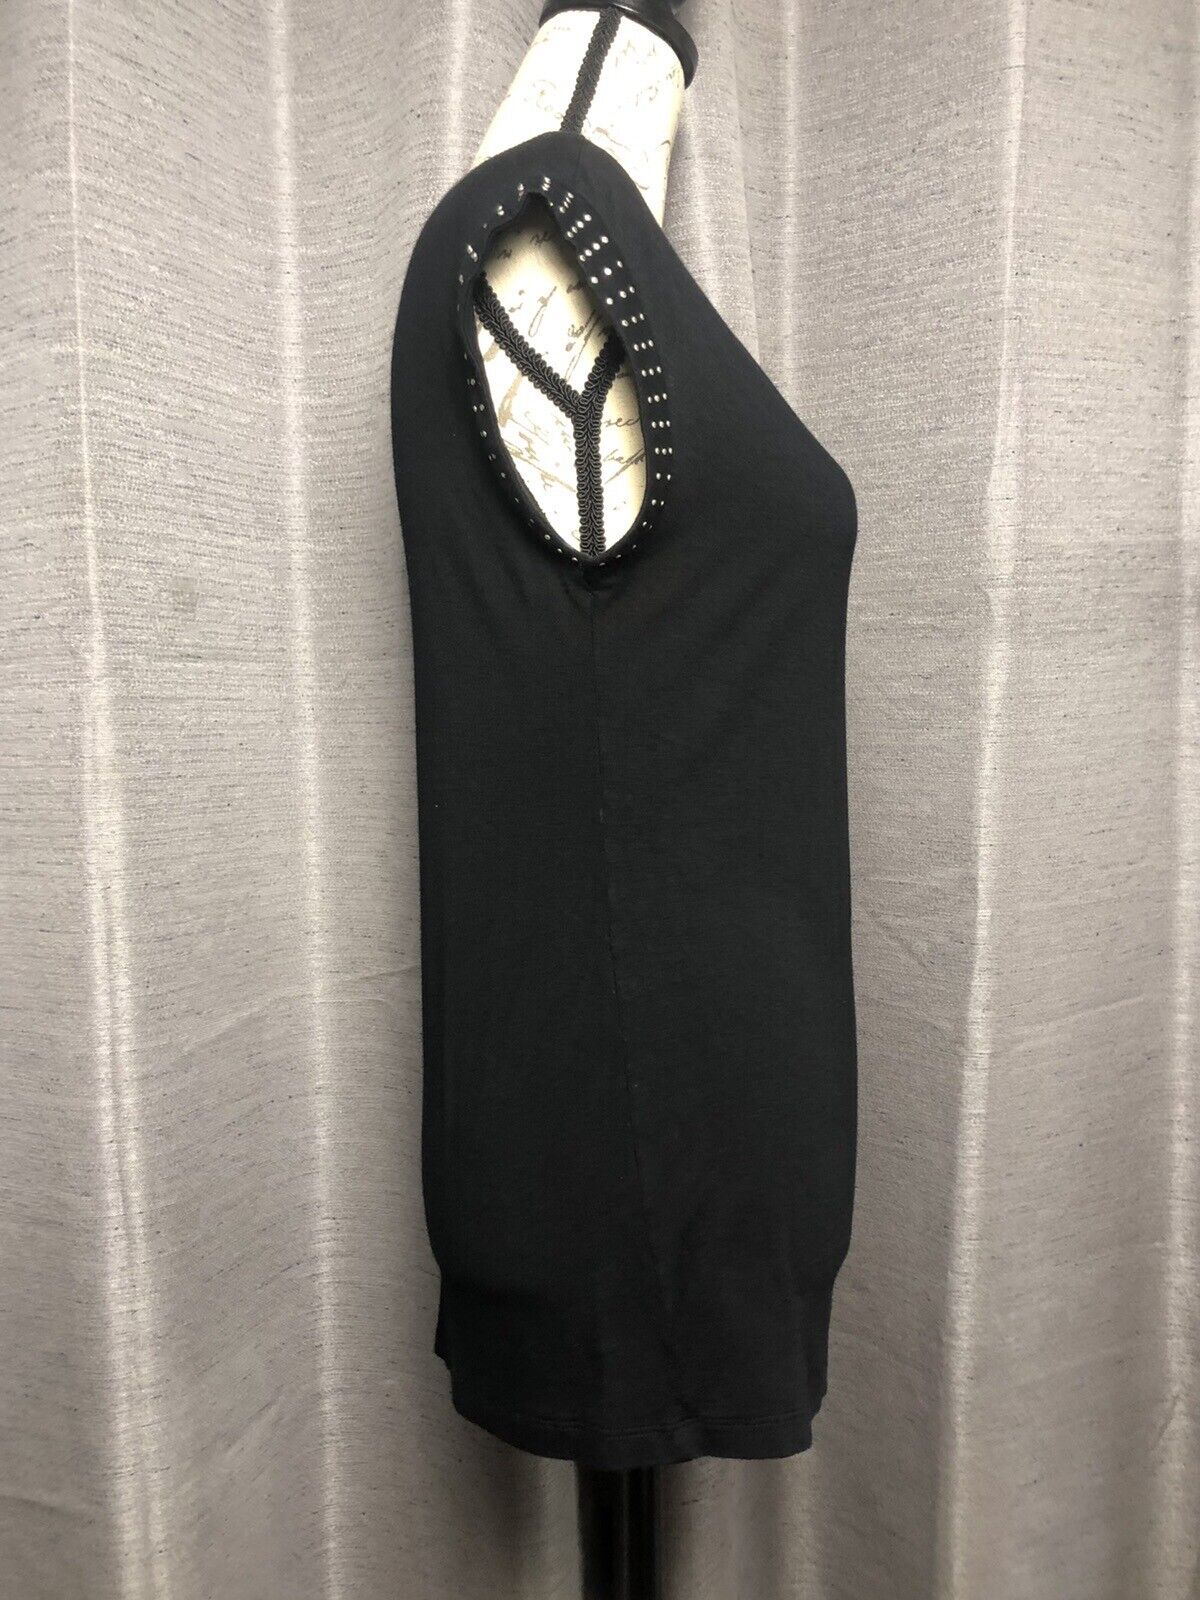 Sacks Fifth Ave Women’s Black Studded T-Shirt - image 3